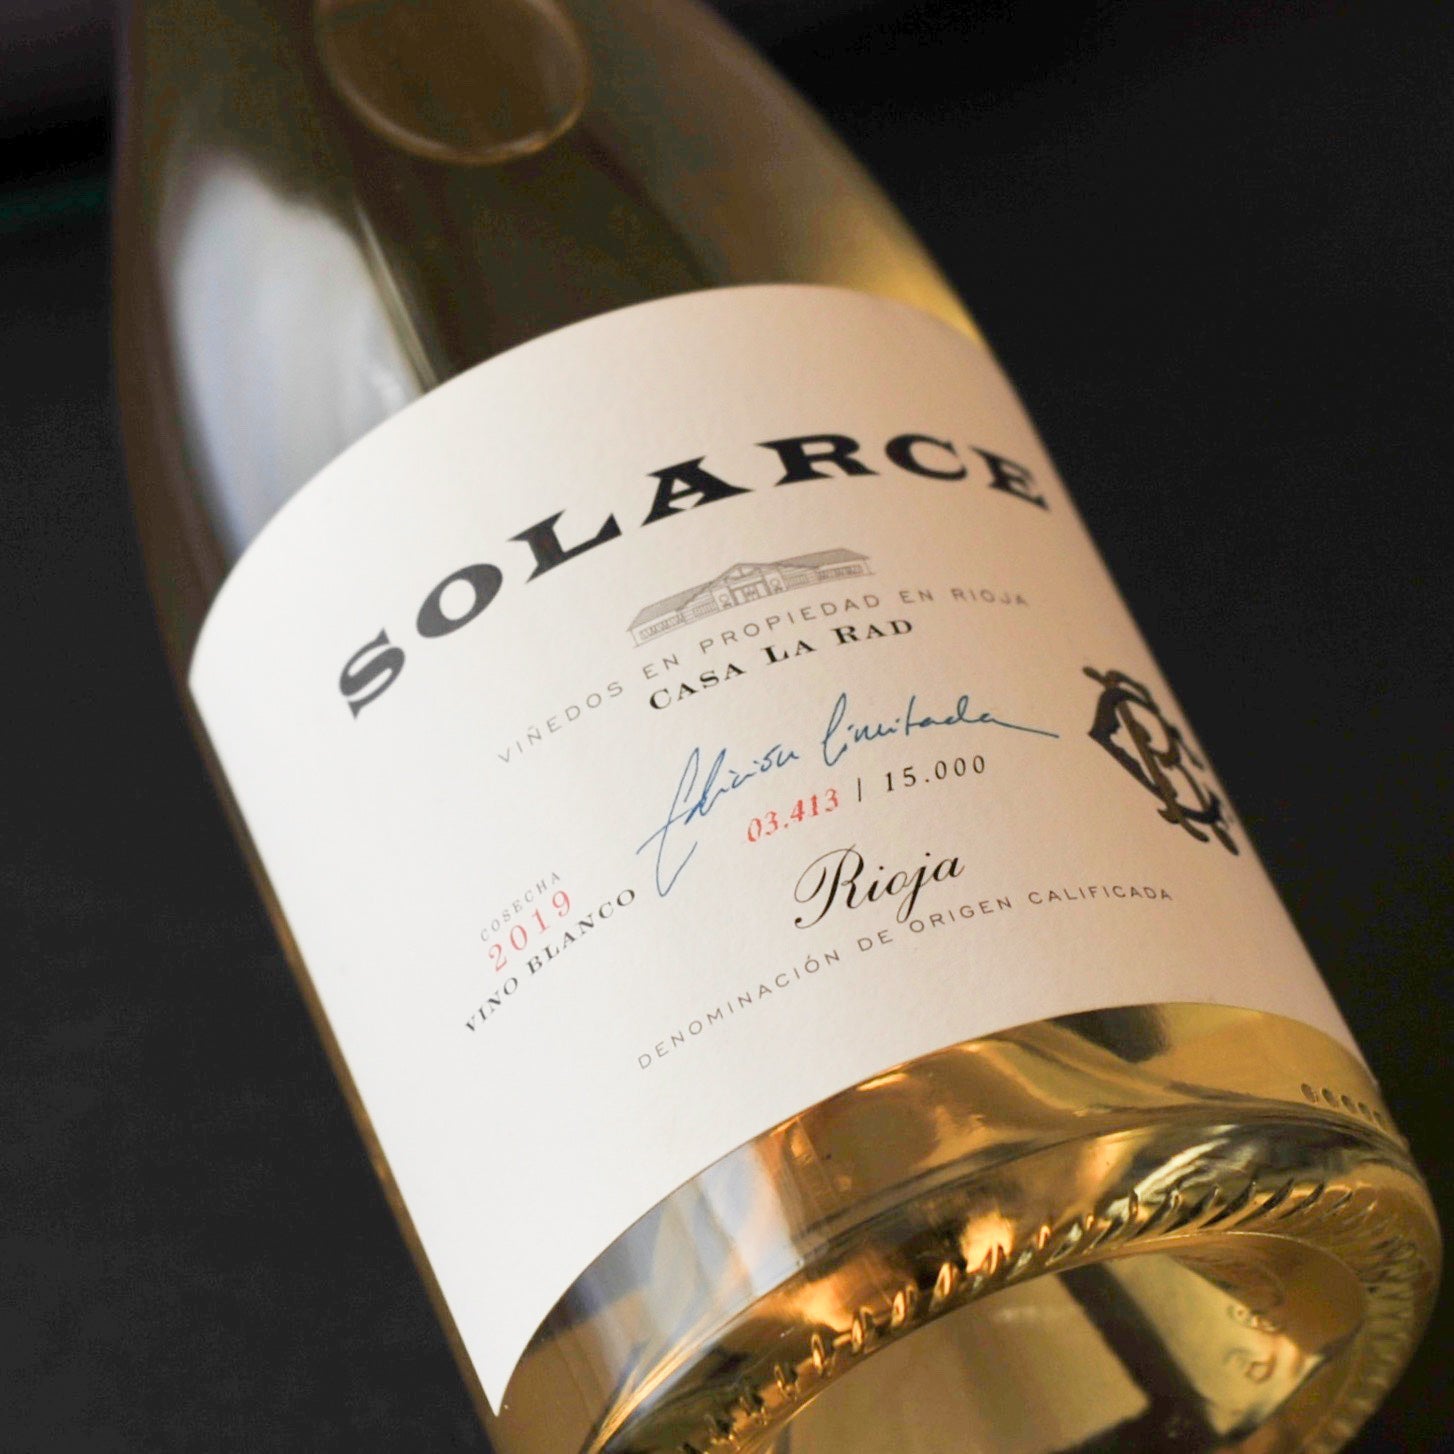 Solarce Blanco - Simply Spanish Wine